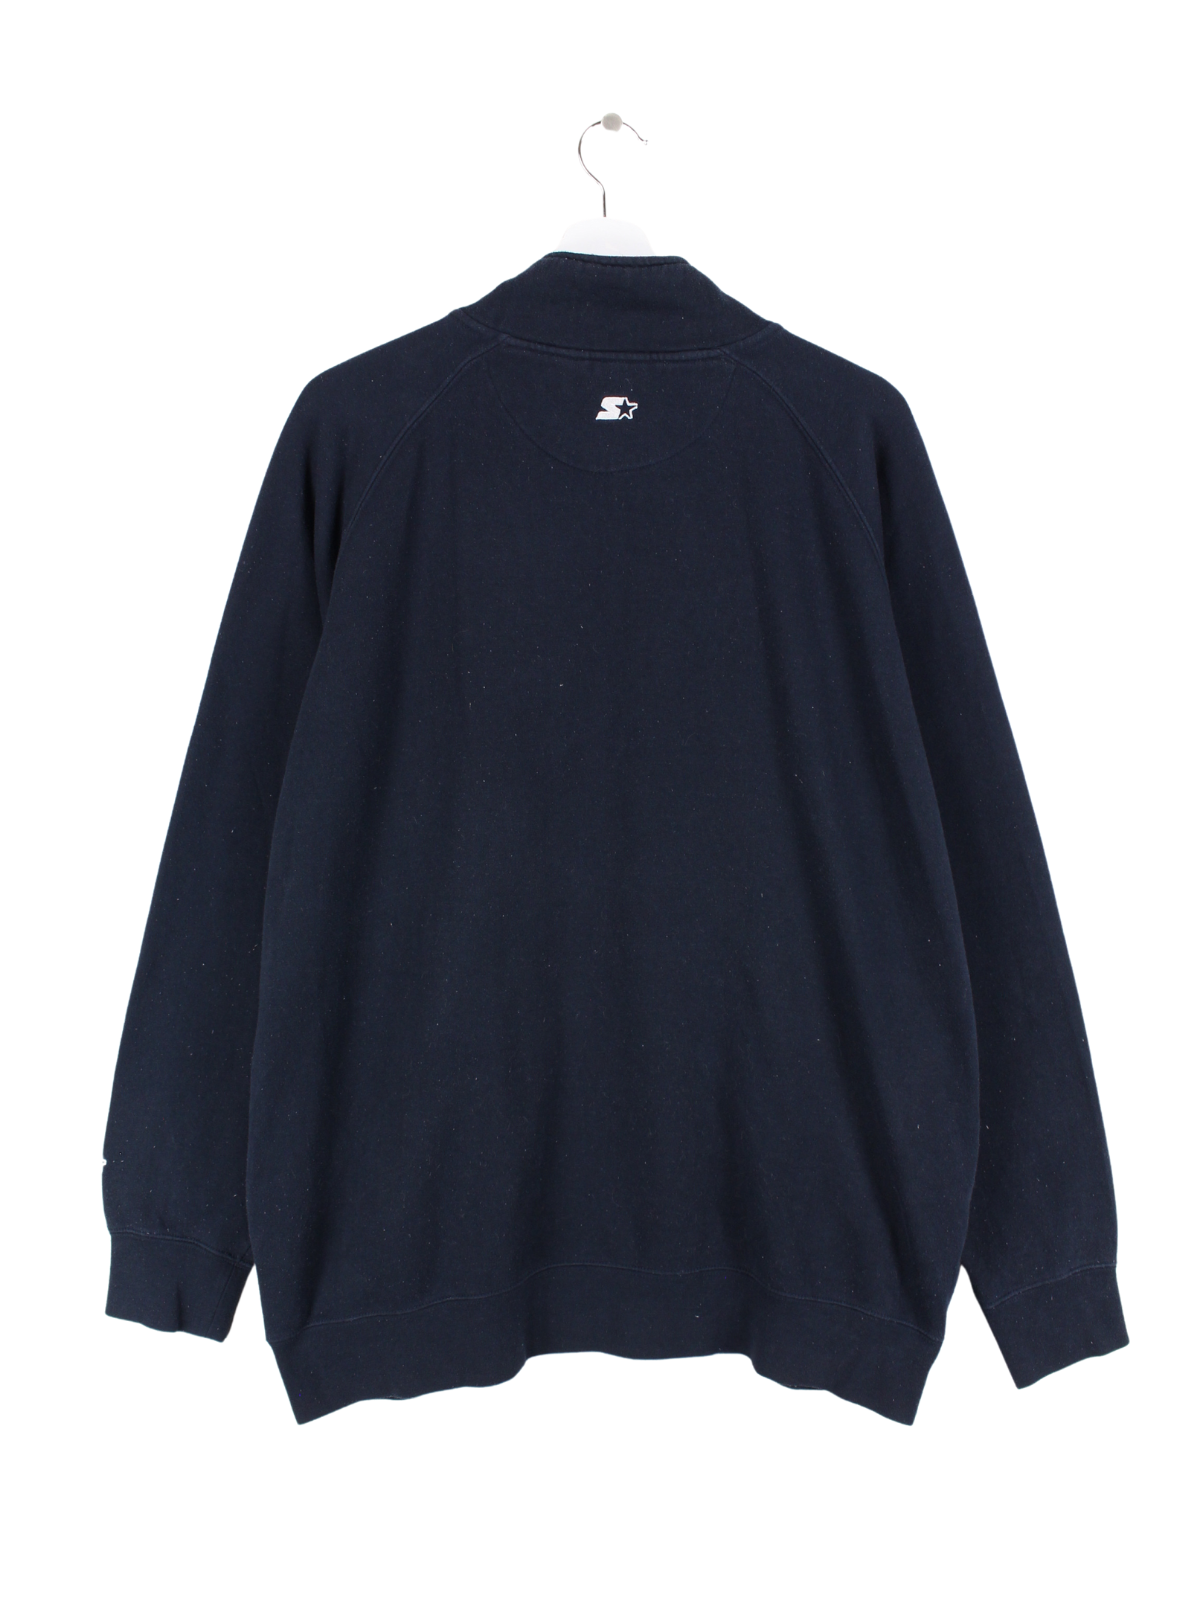 Starter Spellout Zip Sweater Schwarz XL